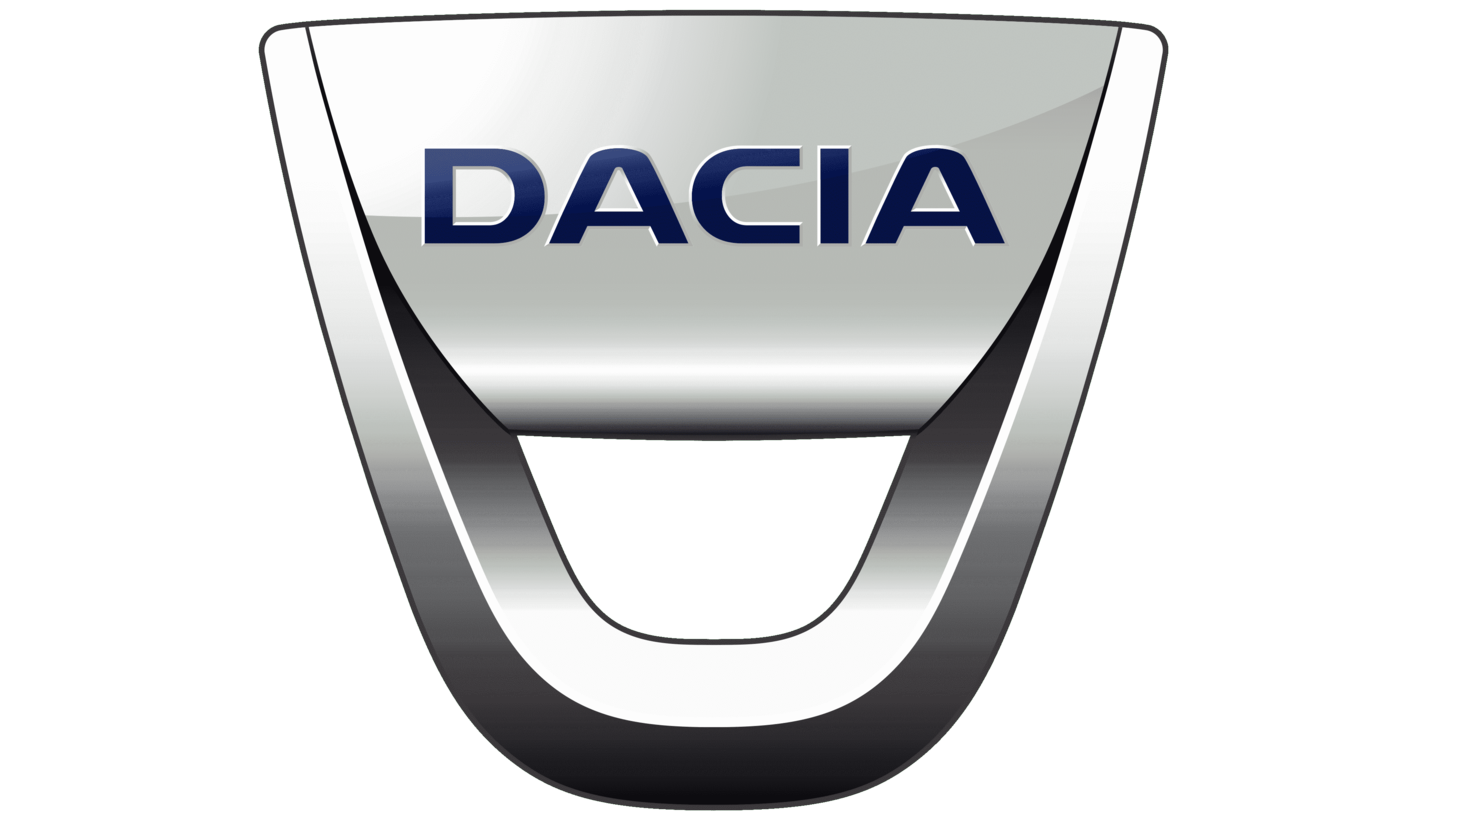 Dacia sign 2008 2015